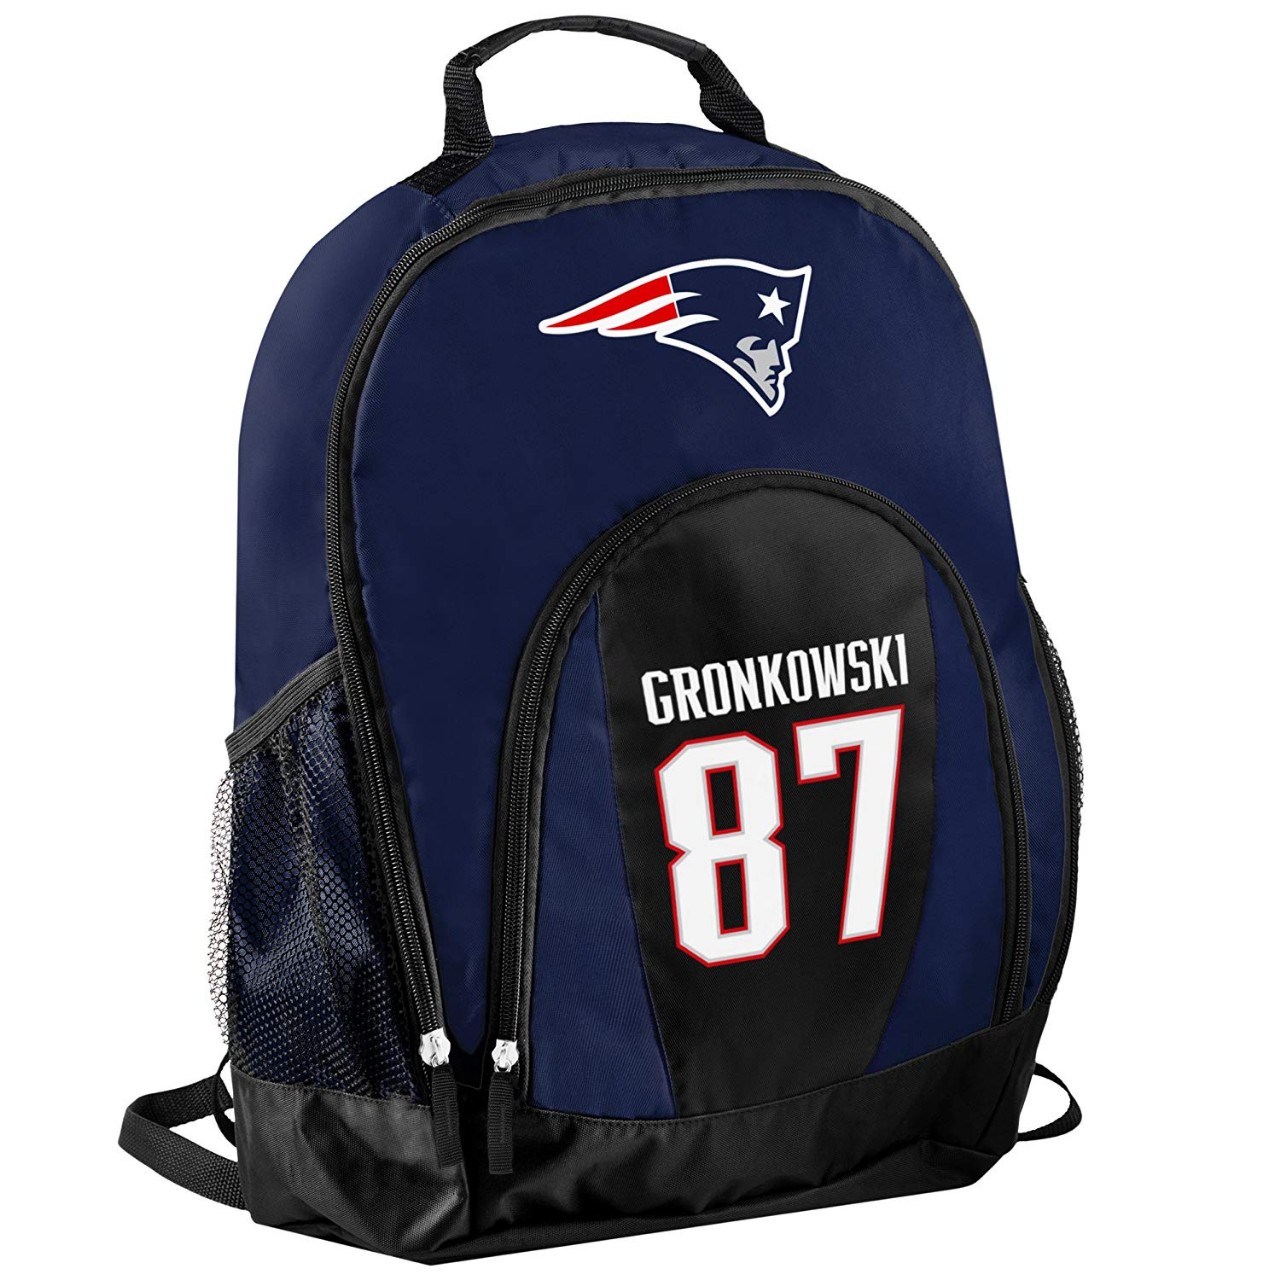 TBFC New England Patriots Official NFL Primetime Backpack Gym Bag - Rob Gronkowski